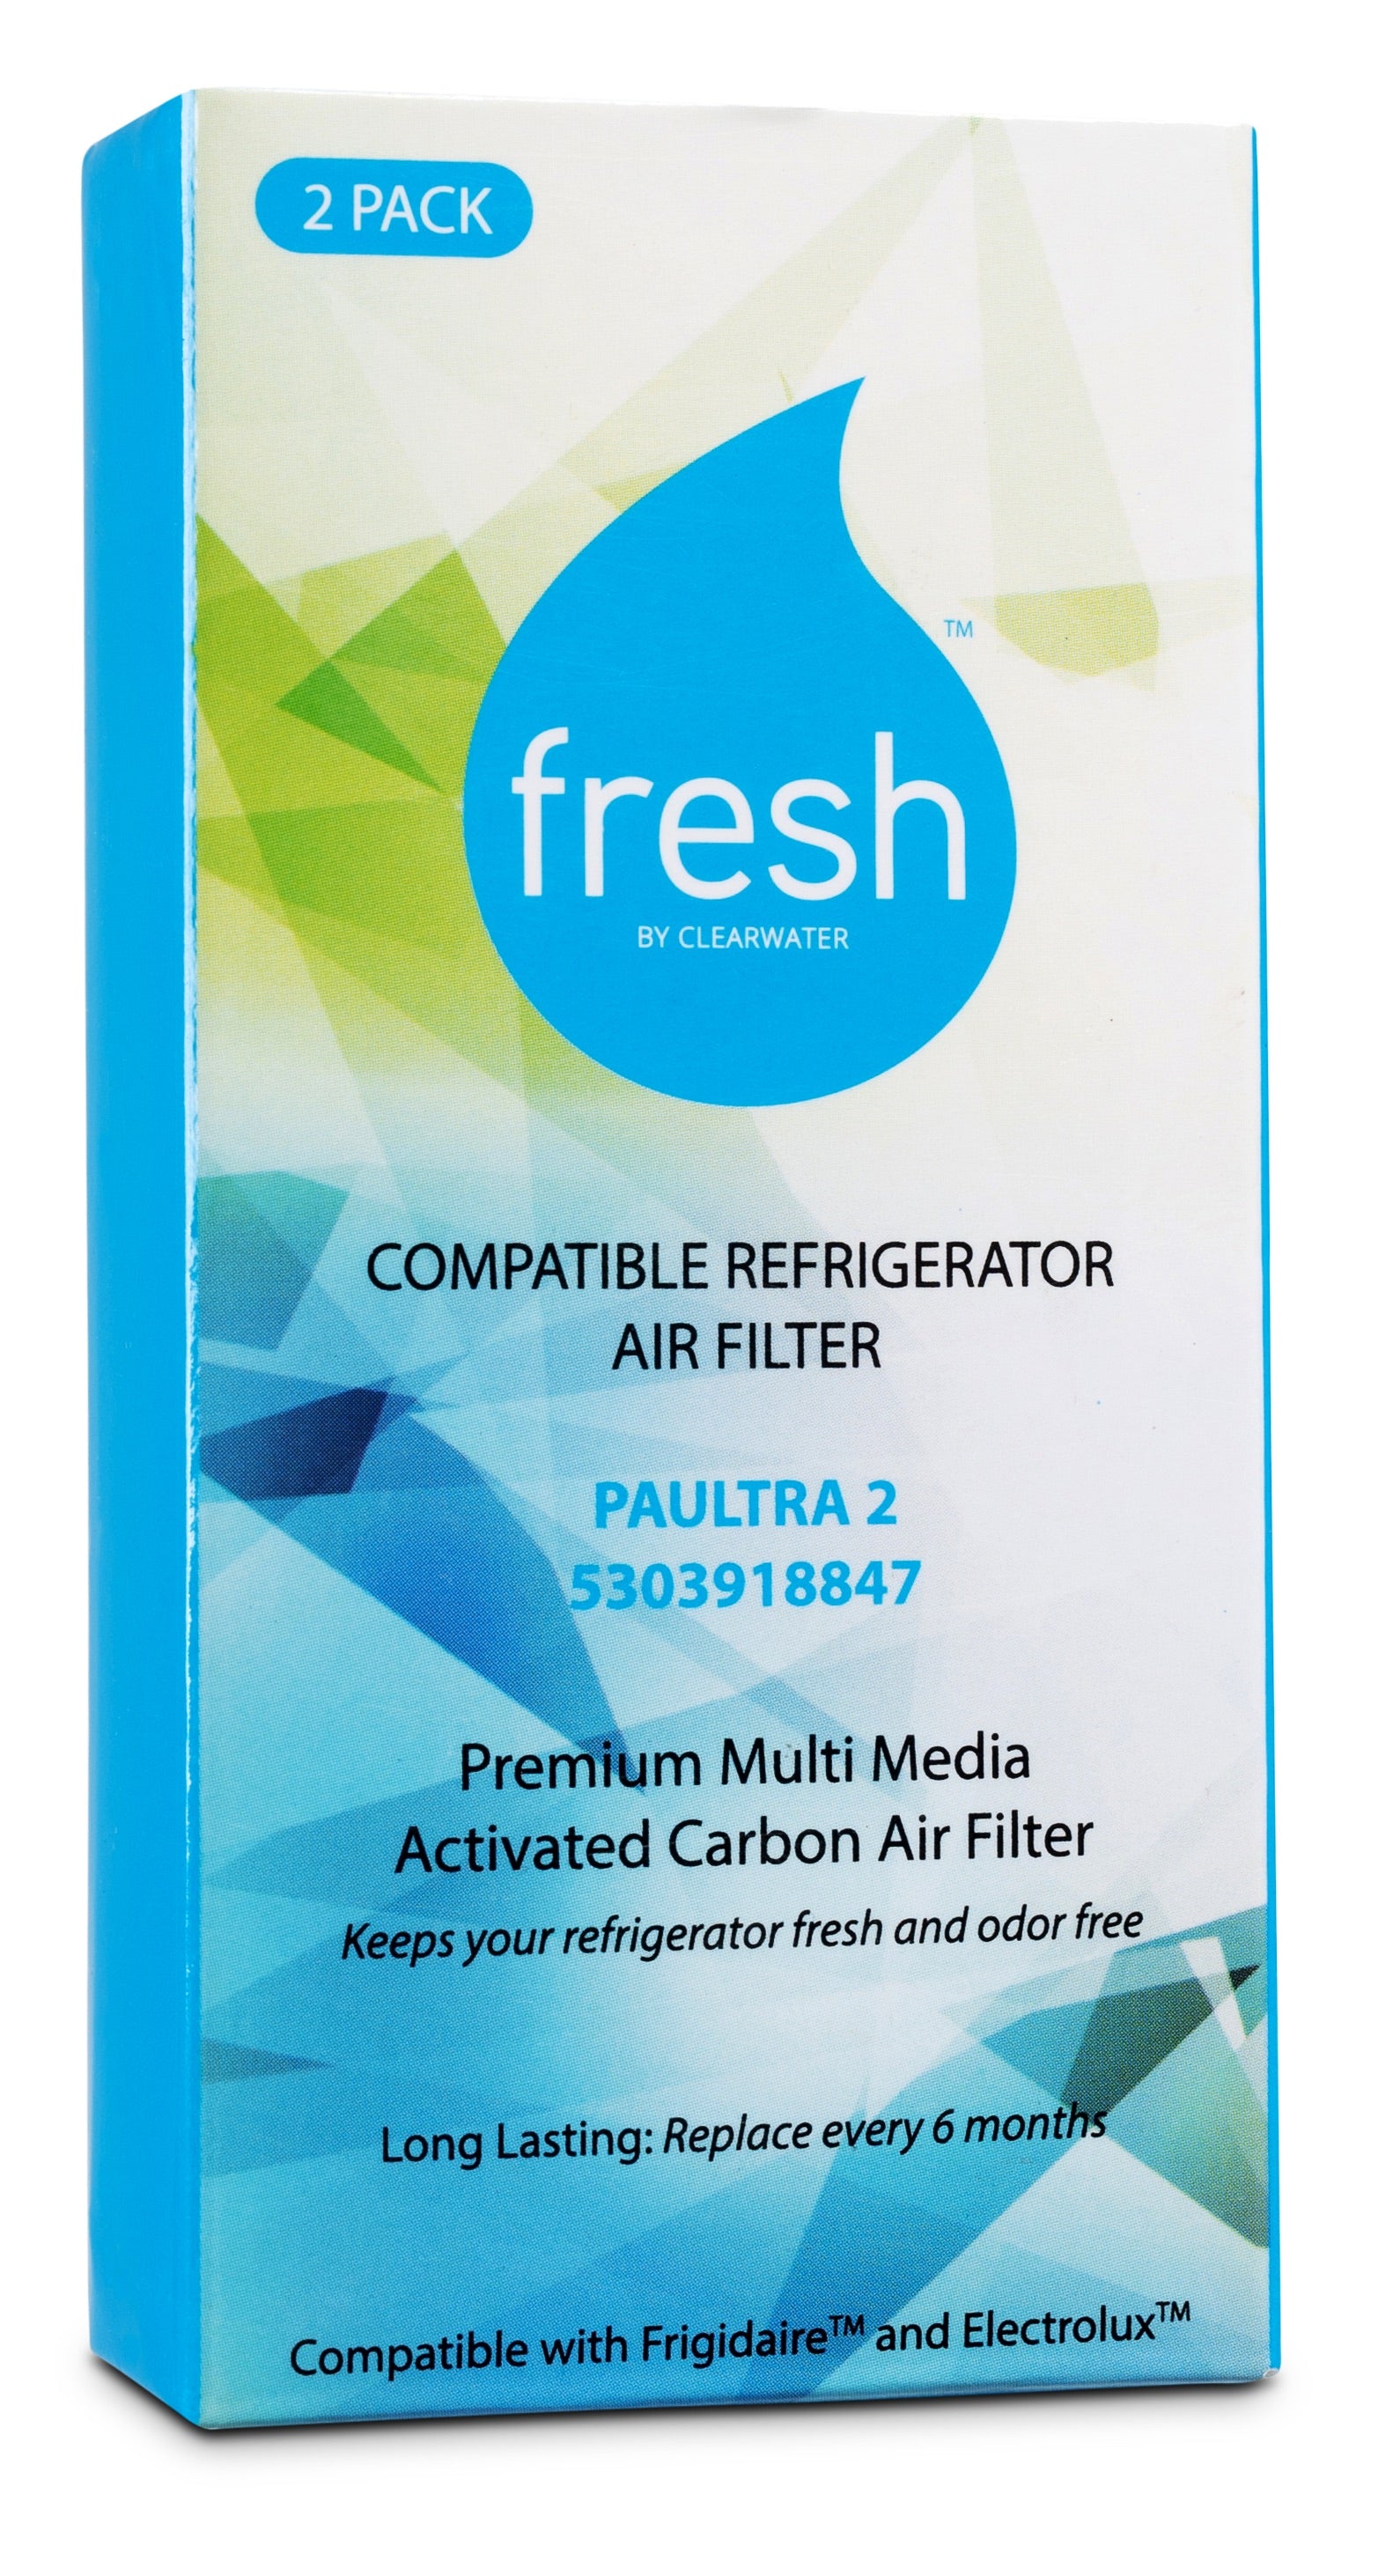 Frigidaire Pureair Ultra Ii(tm) Air Filter - PAULTRA2